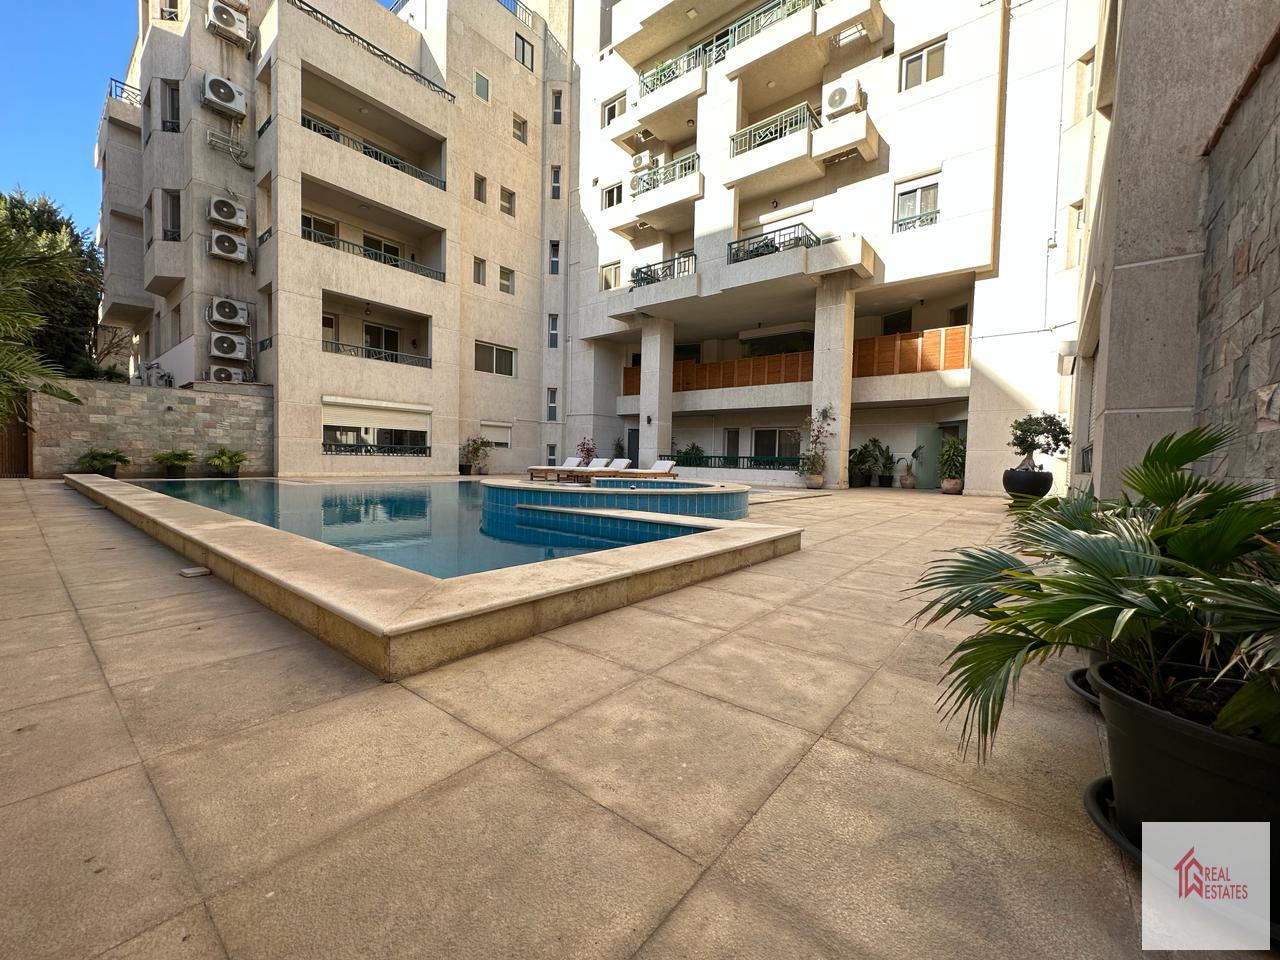 Ground Apartment floor 2 bedrooms 2 bathroom rent maadi Sarayate shared swimming pool Cairo Egypt